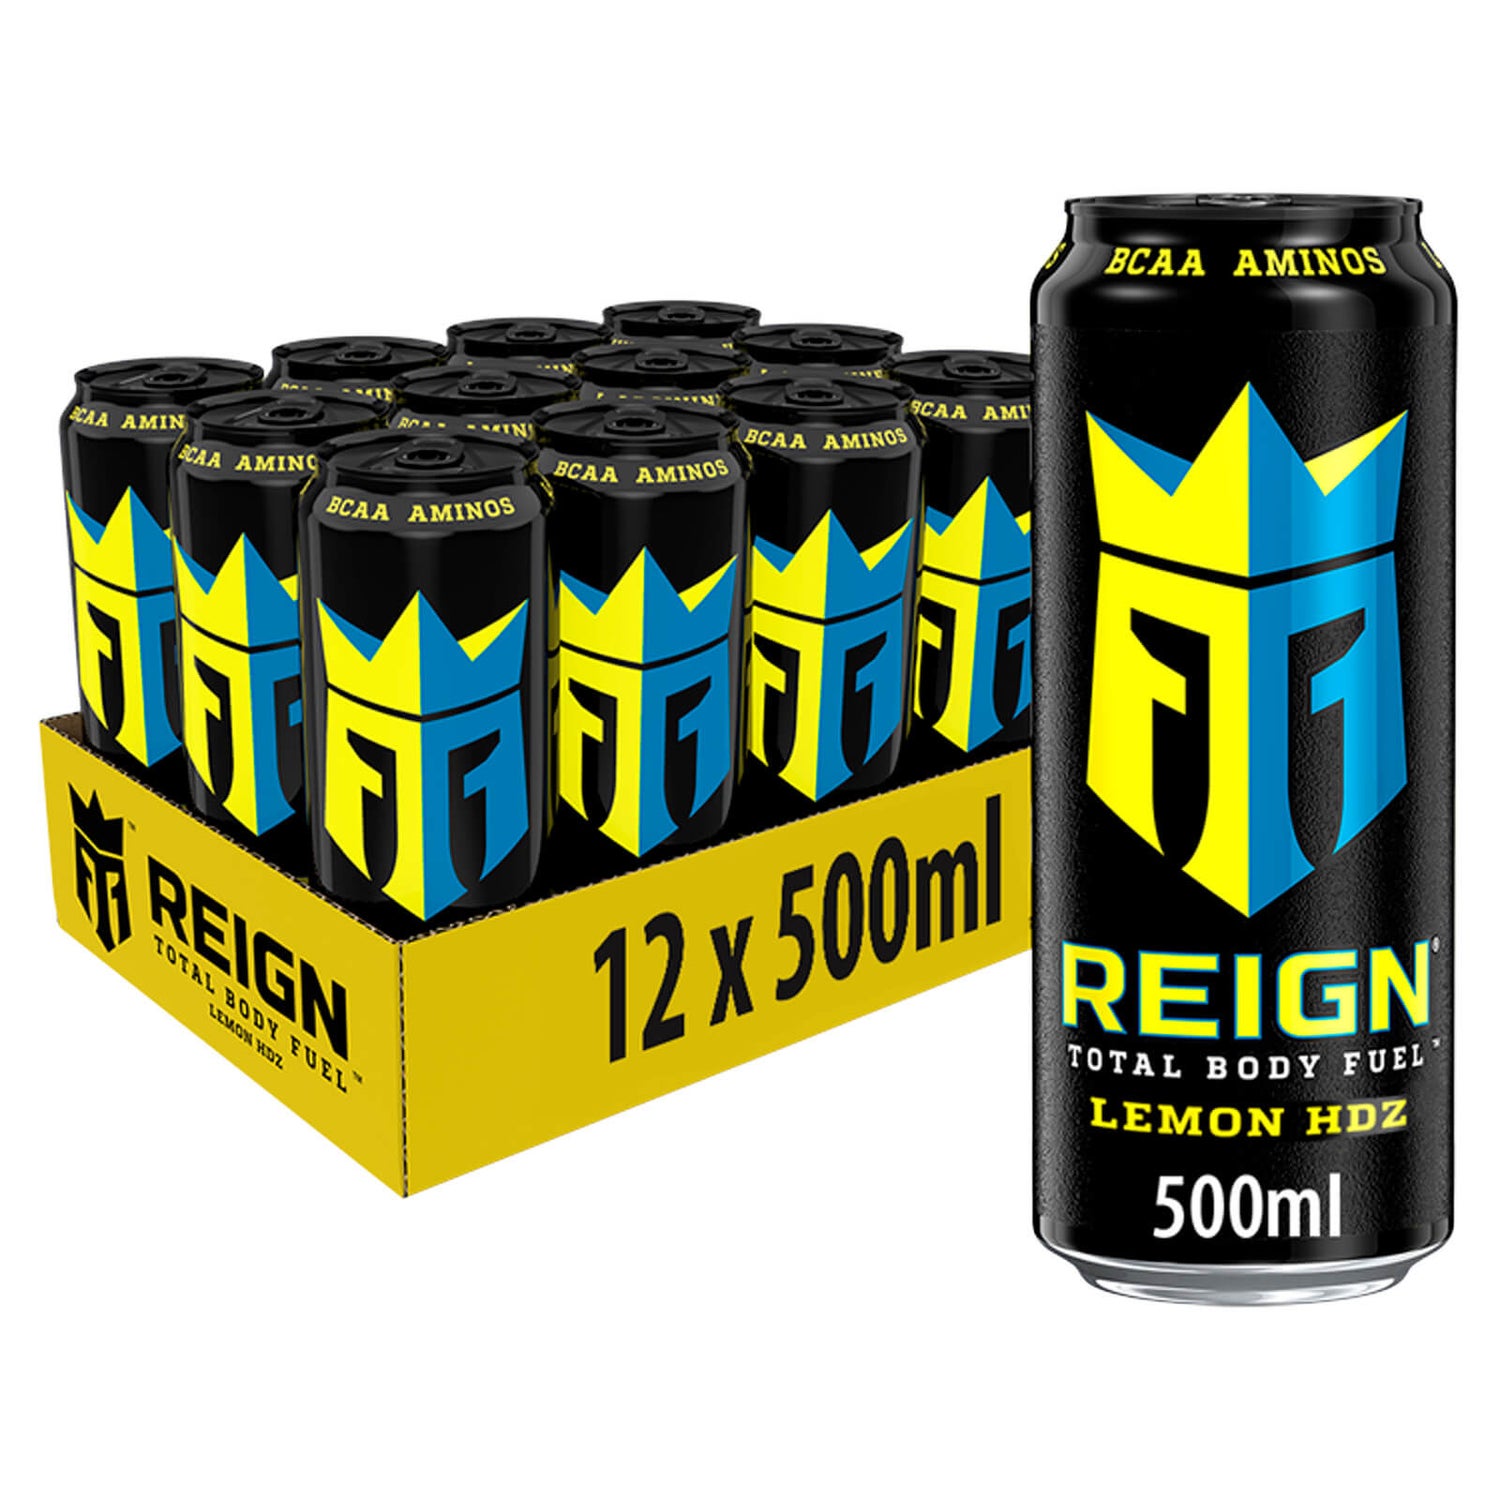 Reign Lemon Hdz 12 x 500ml